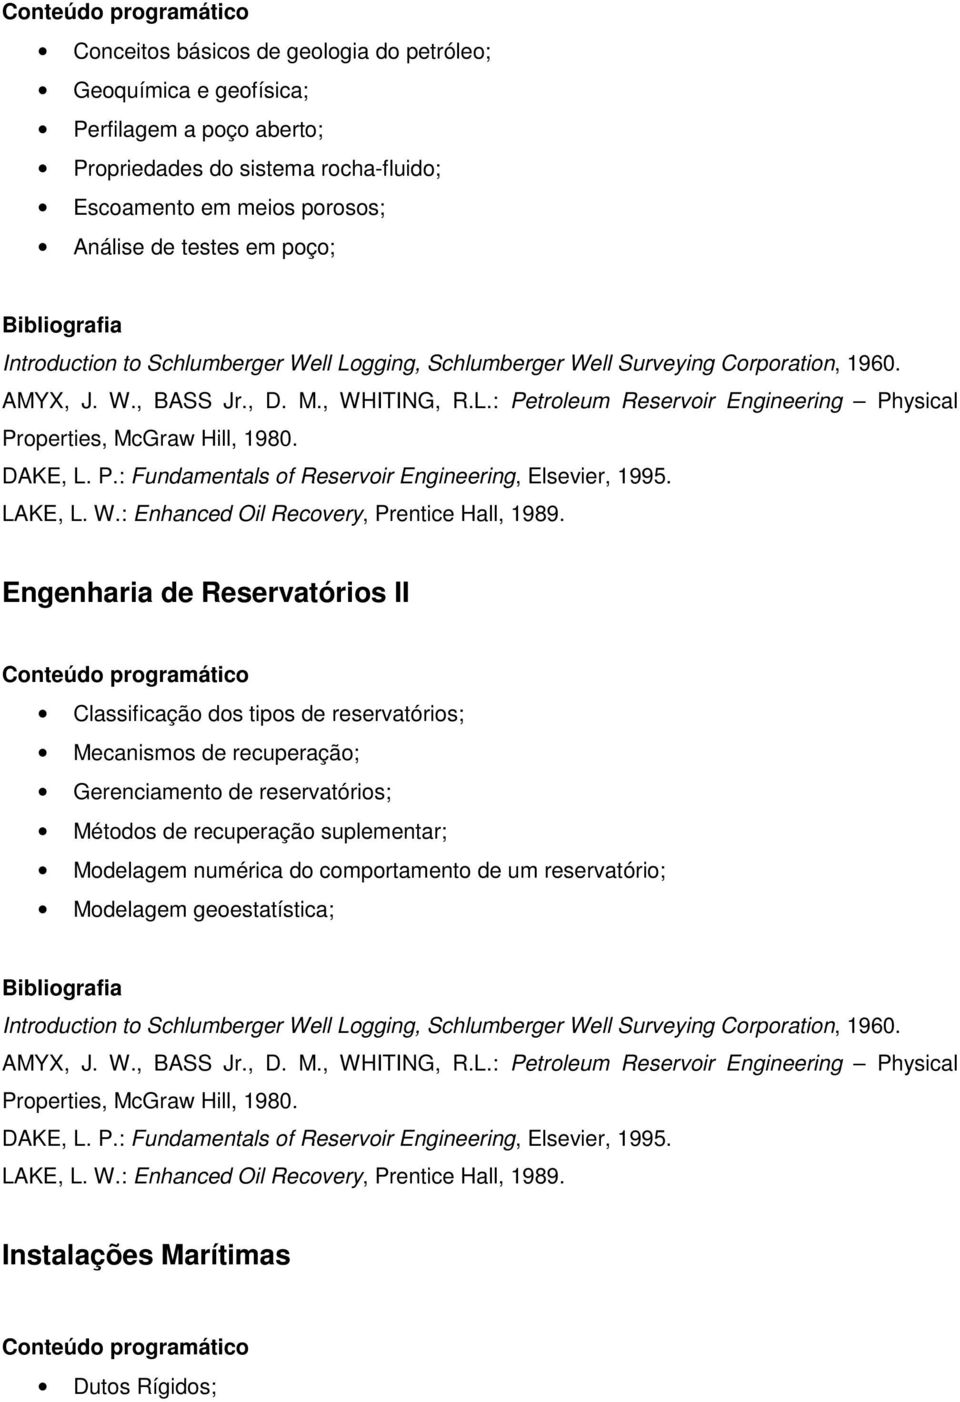 DAKE, L. P.: Fundamentals of Reservoir Engineering, Elsevier, 1995. LAKE, L. W.: Enhanced Oil Recovery, Prentice Hall, 1989.